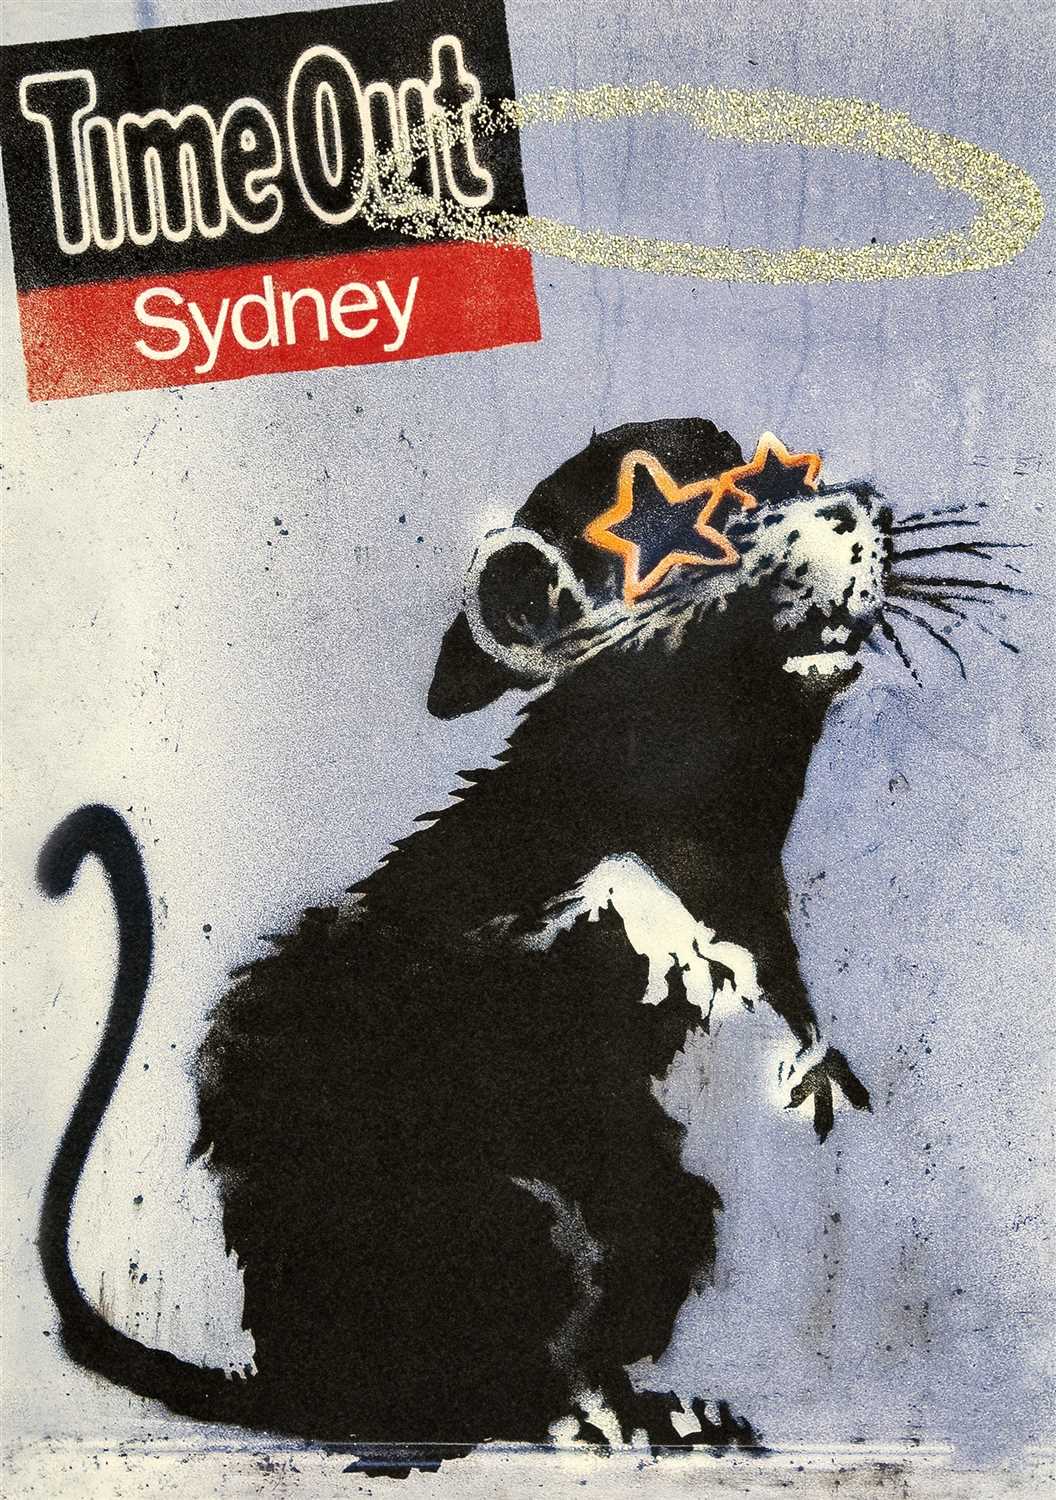 Lot 59 - Banksy (British b.1974), 'Time Out Sydney', 2010